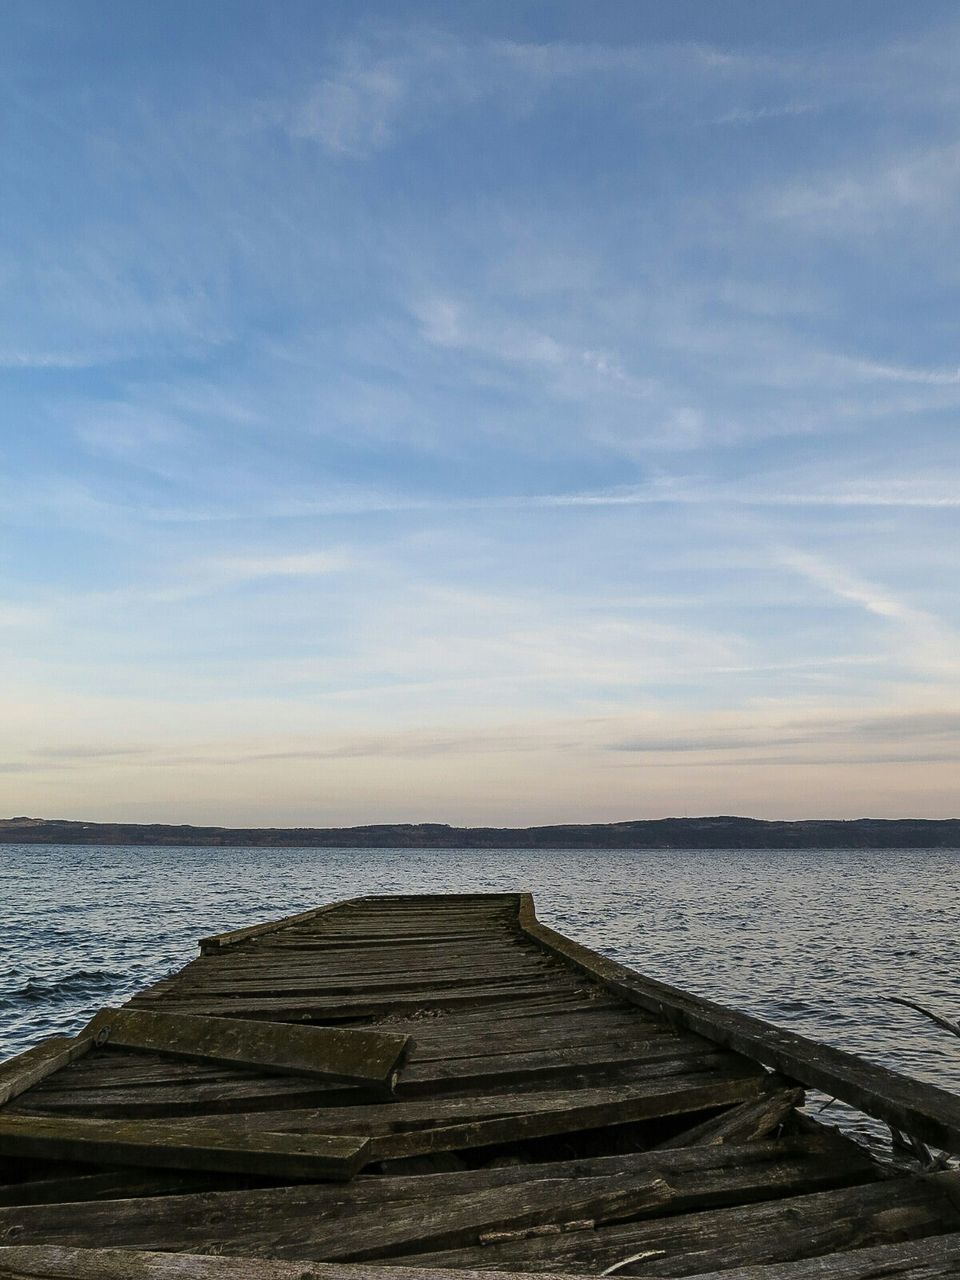 Damaged pier over lake against sky